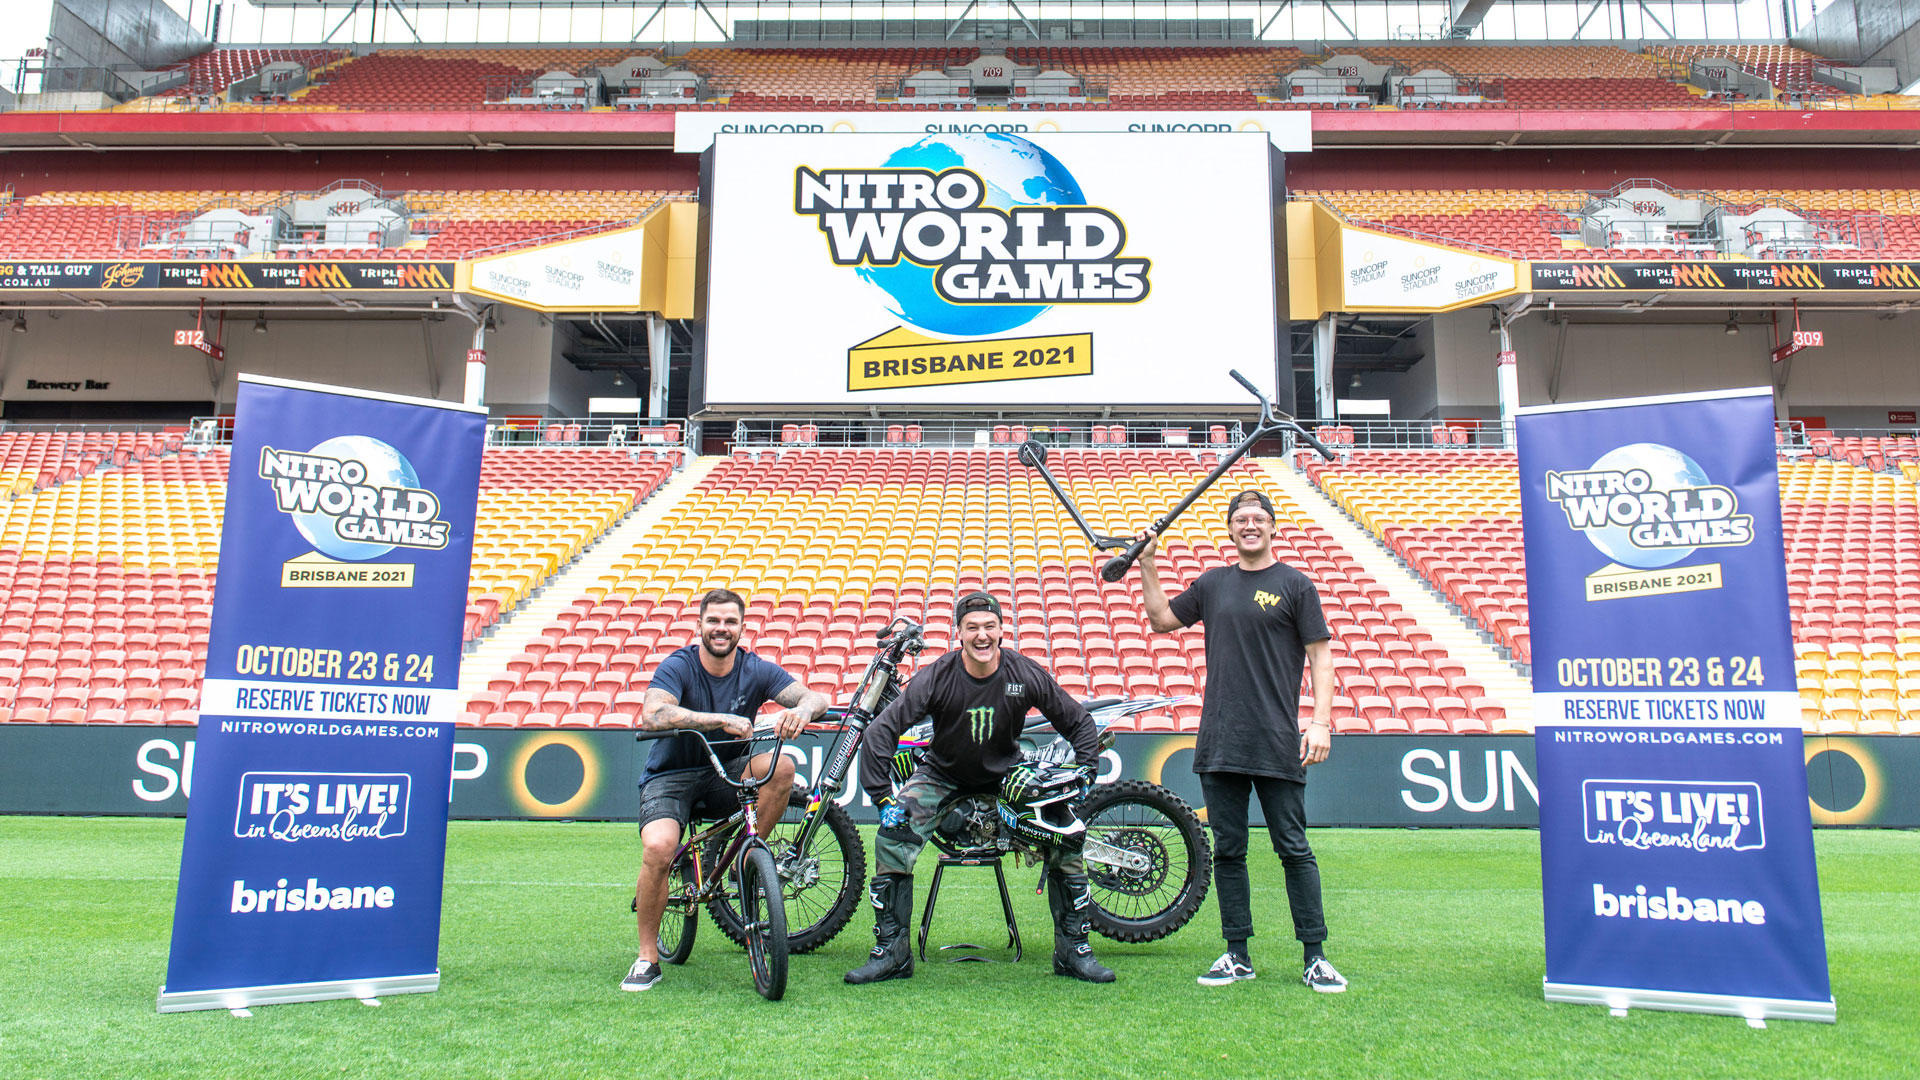 Brisbane's Suncorp Stadium will host the event ©Nitro World Games